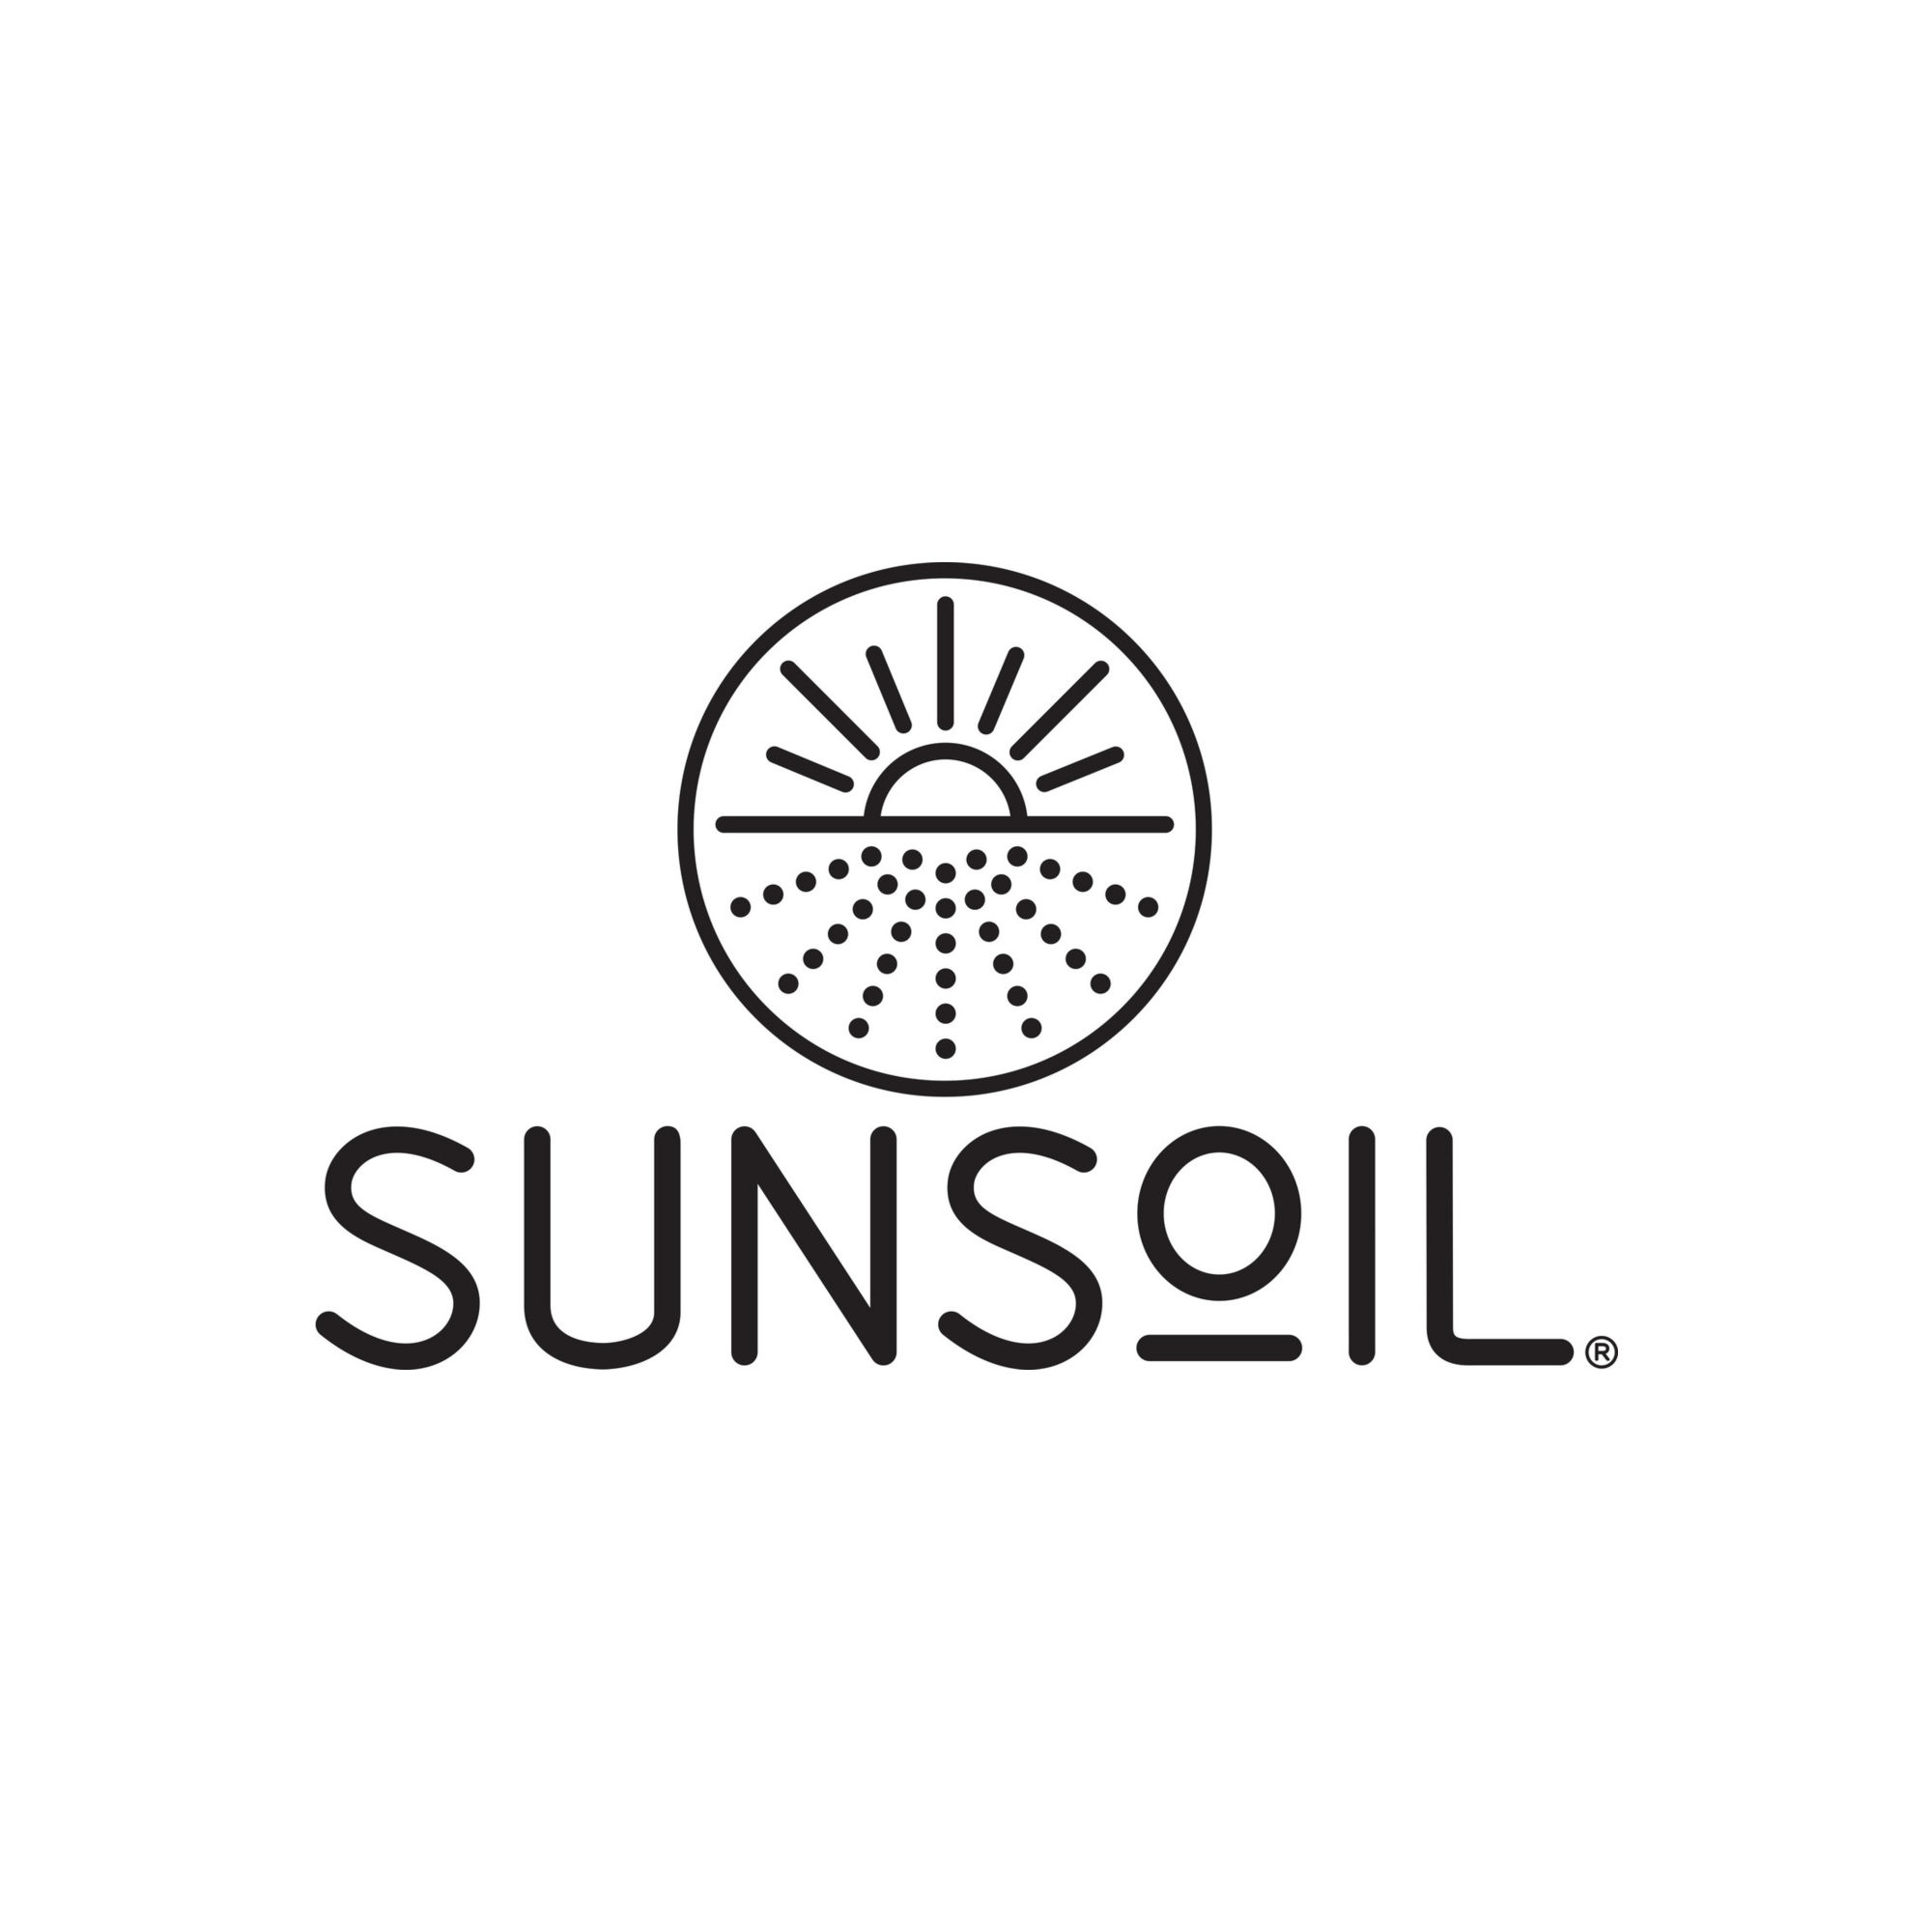 sunsoil logo